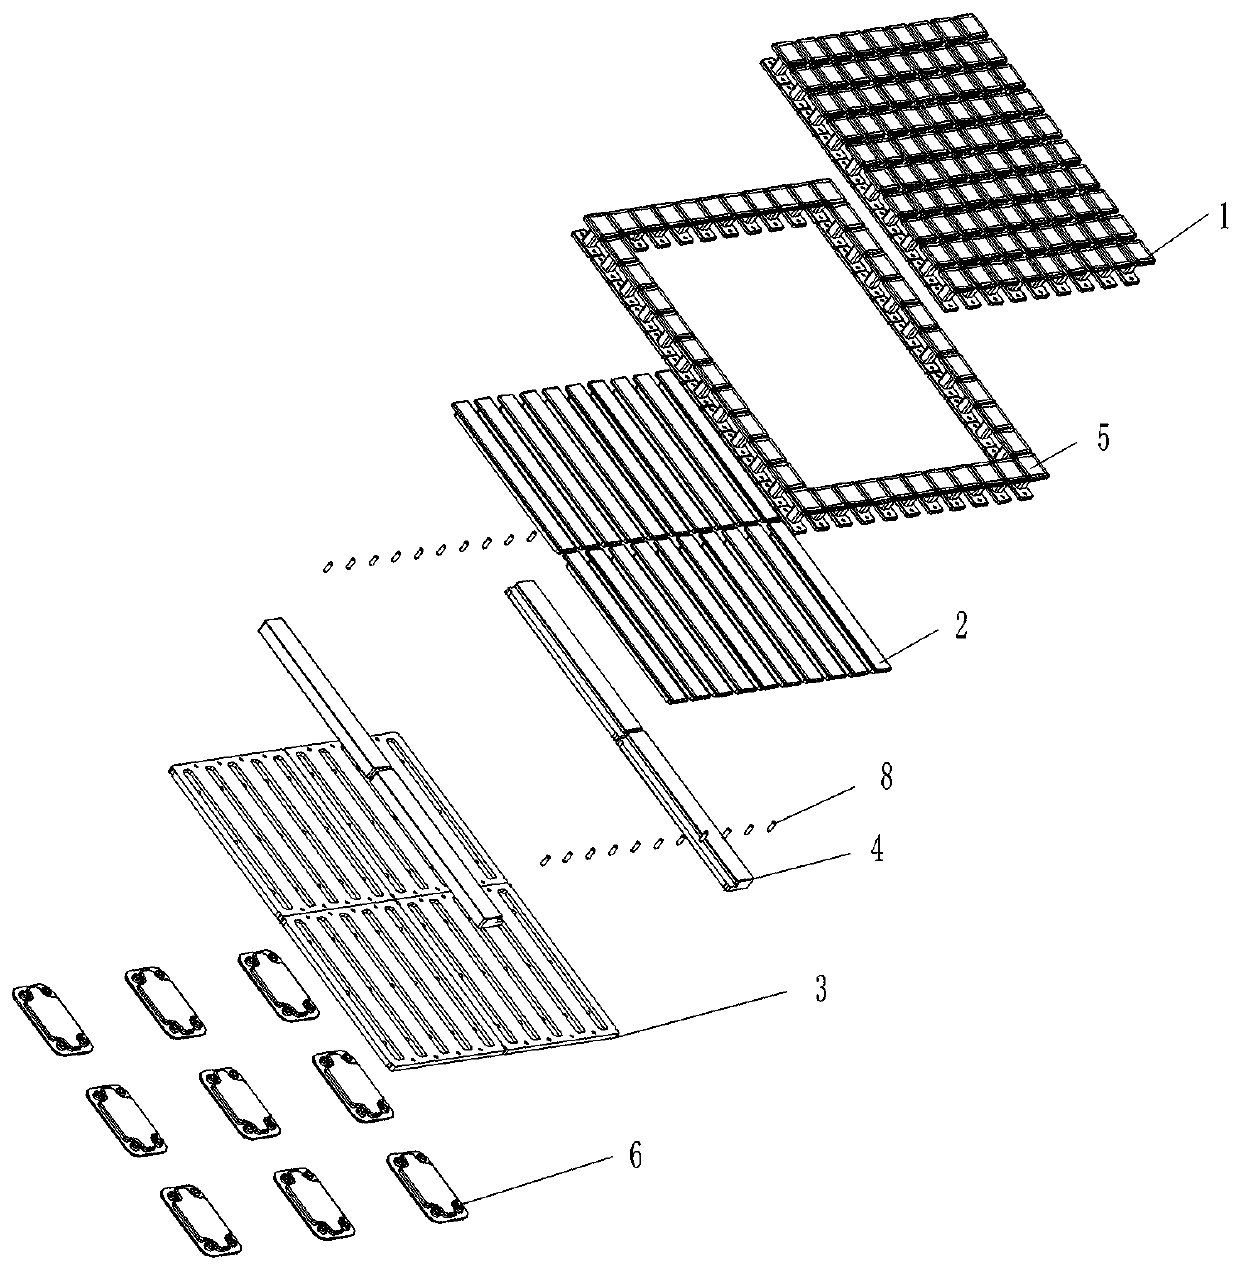 Groove inserting lattice member combination checkerboard structure